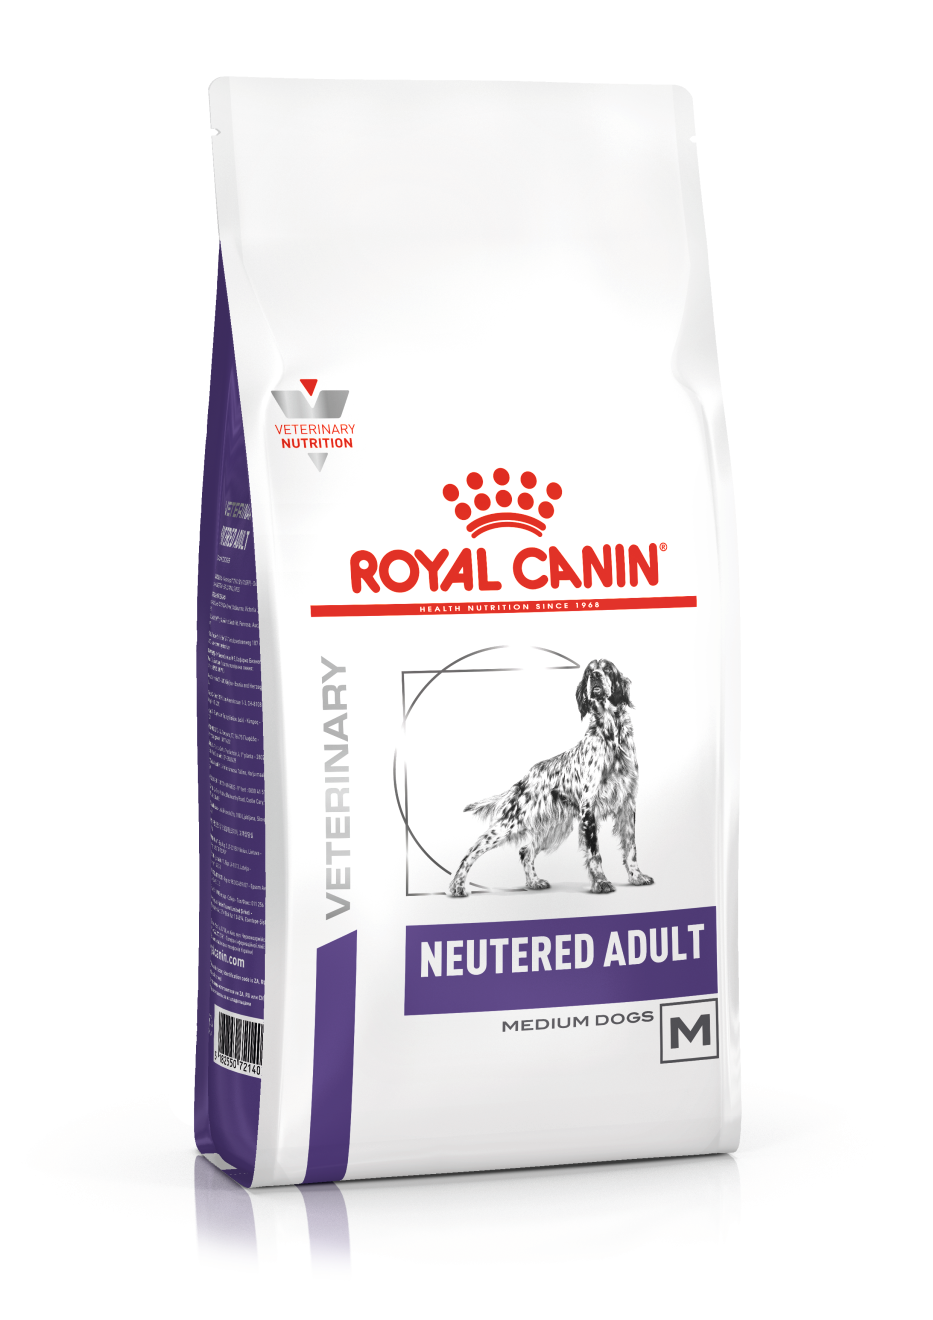 Royal Canin neutered adult medium dog   ________    1 x 9 kg